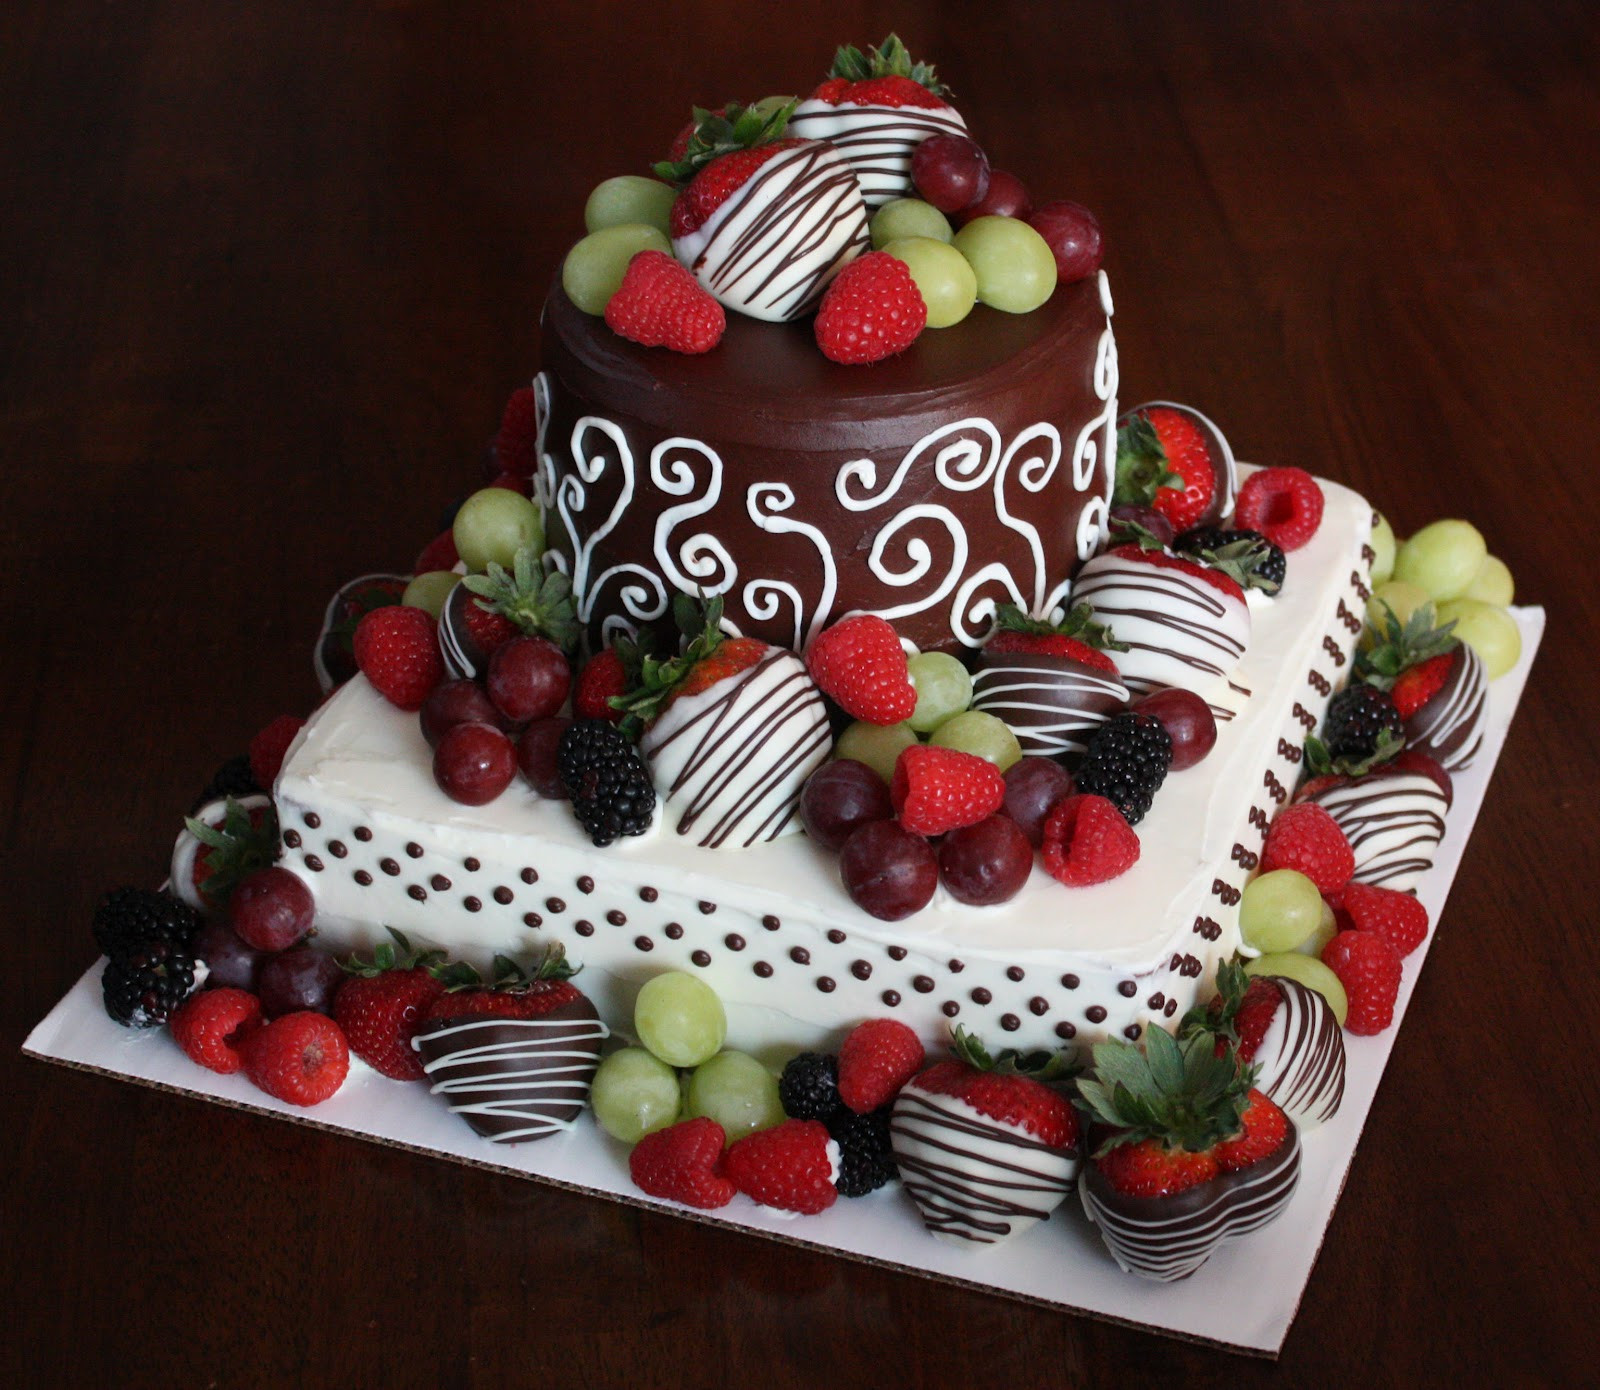 40th Birthday Cake Decorating Ideas
 Straight to Cake 40th Birthday Cake